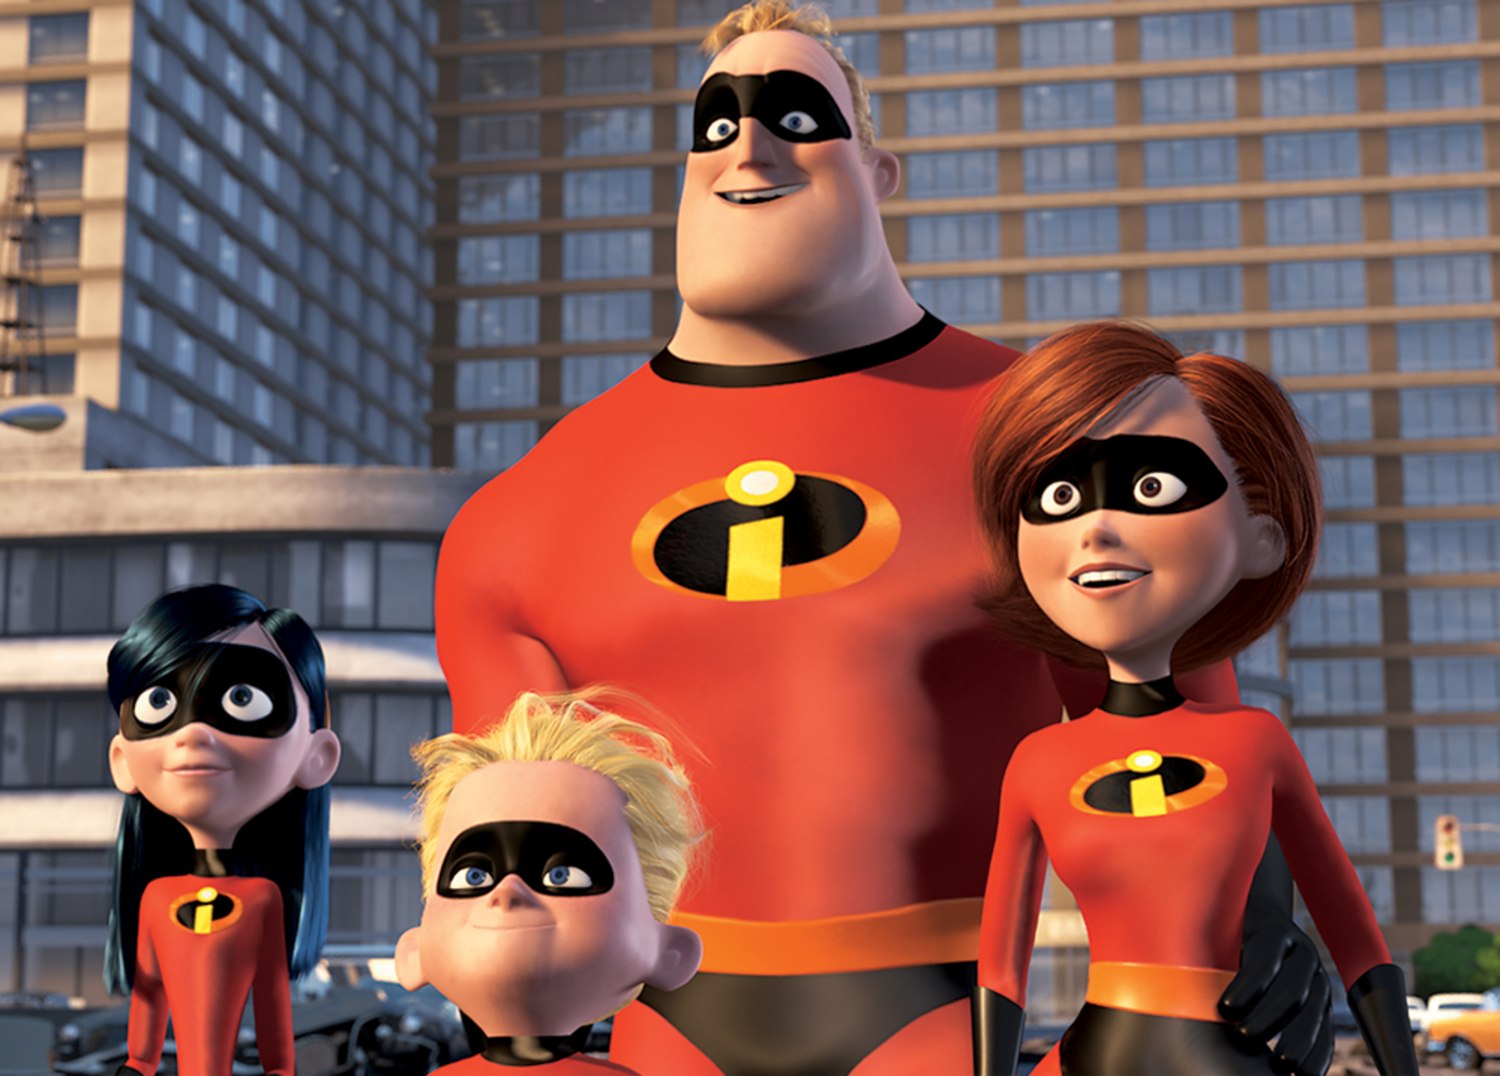 Disney in talks to buy Pixar Animation Studios